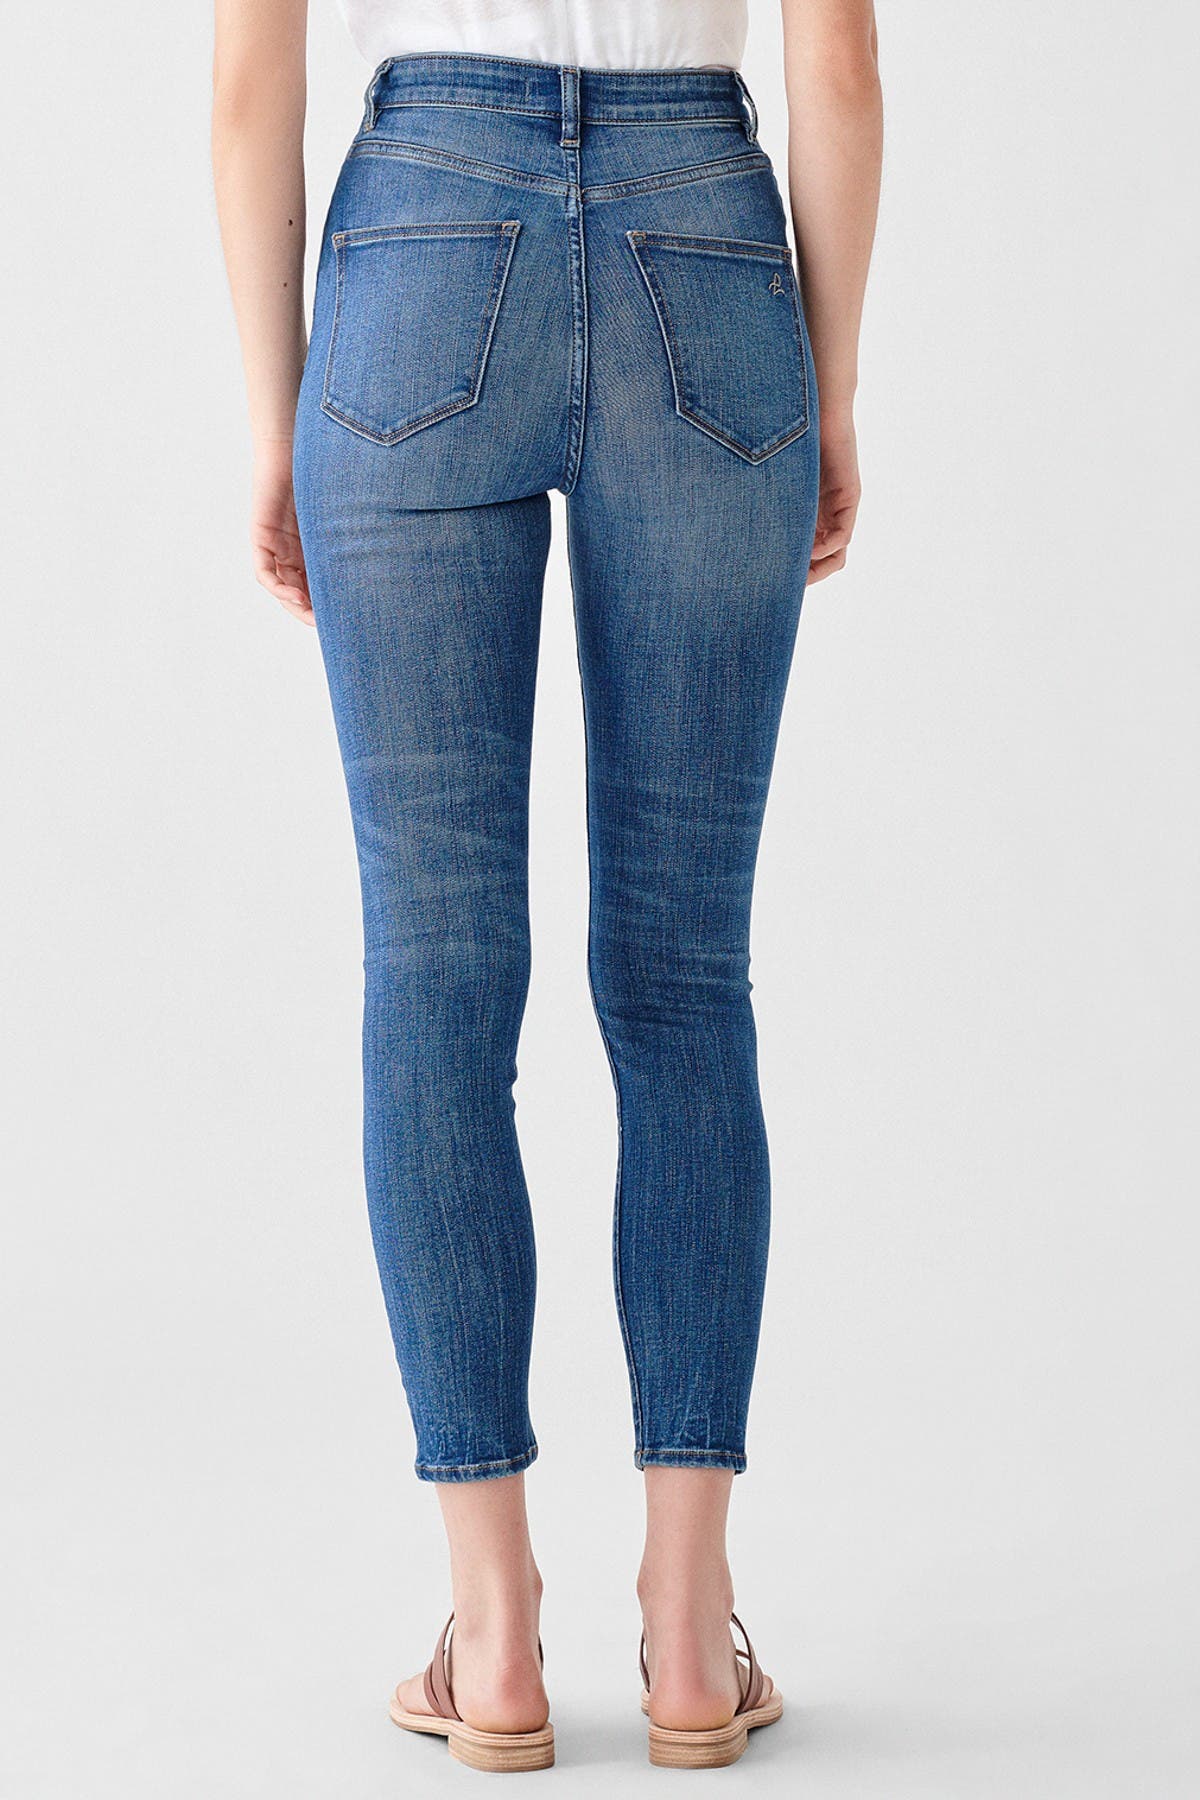 dl1961 chrissy jeans